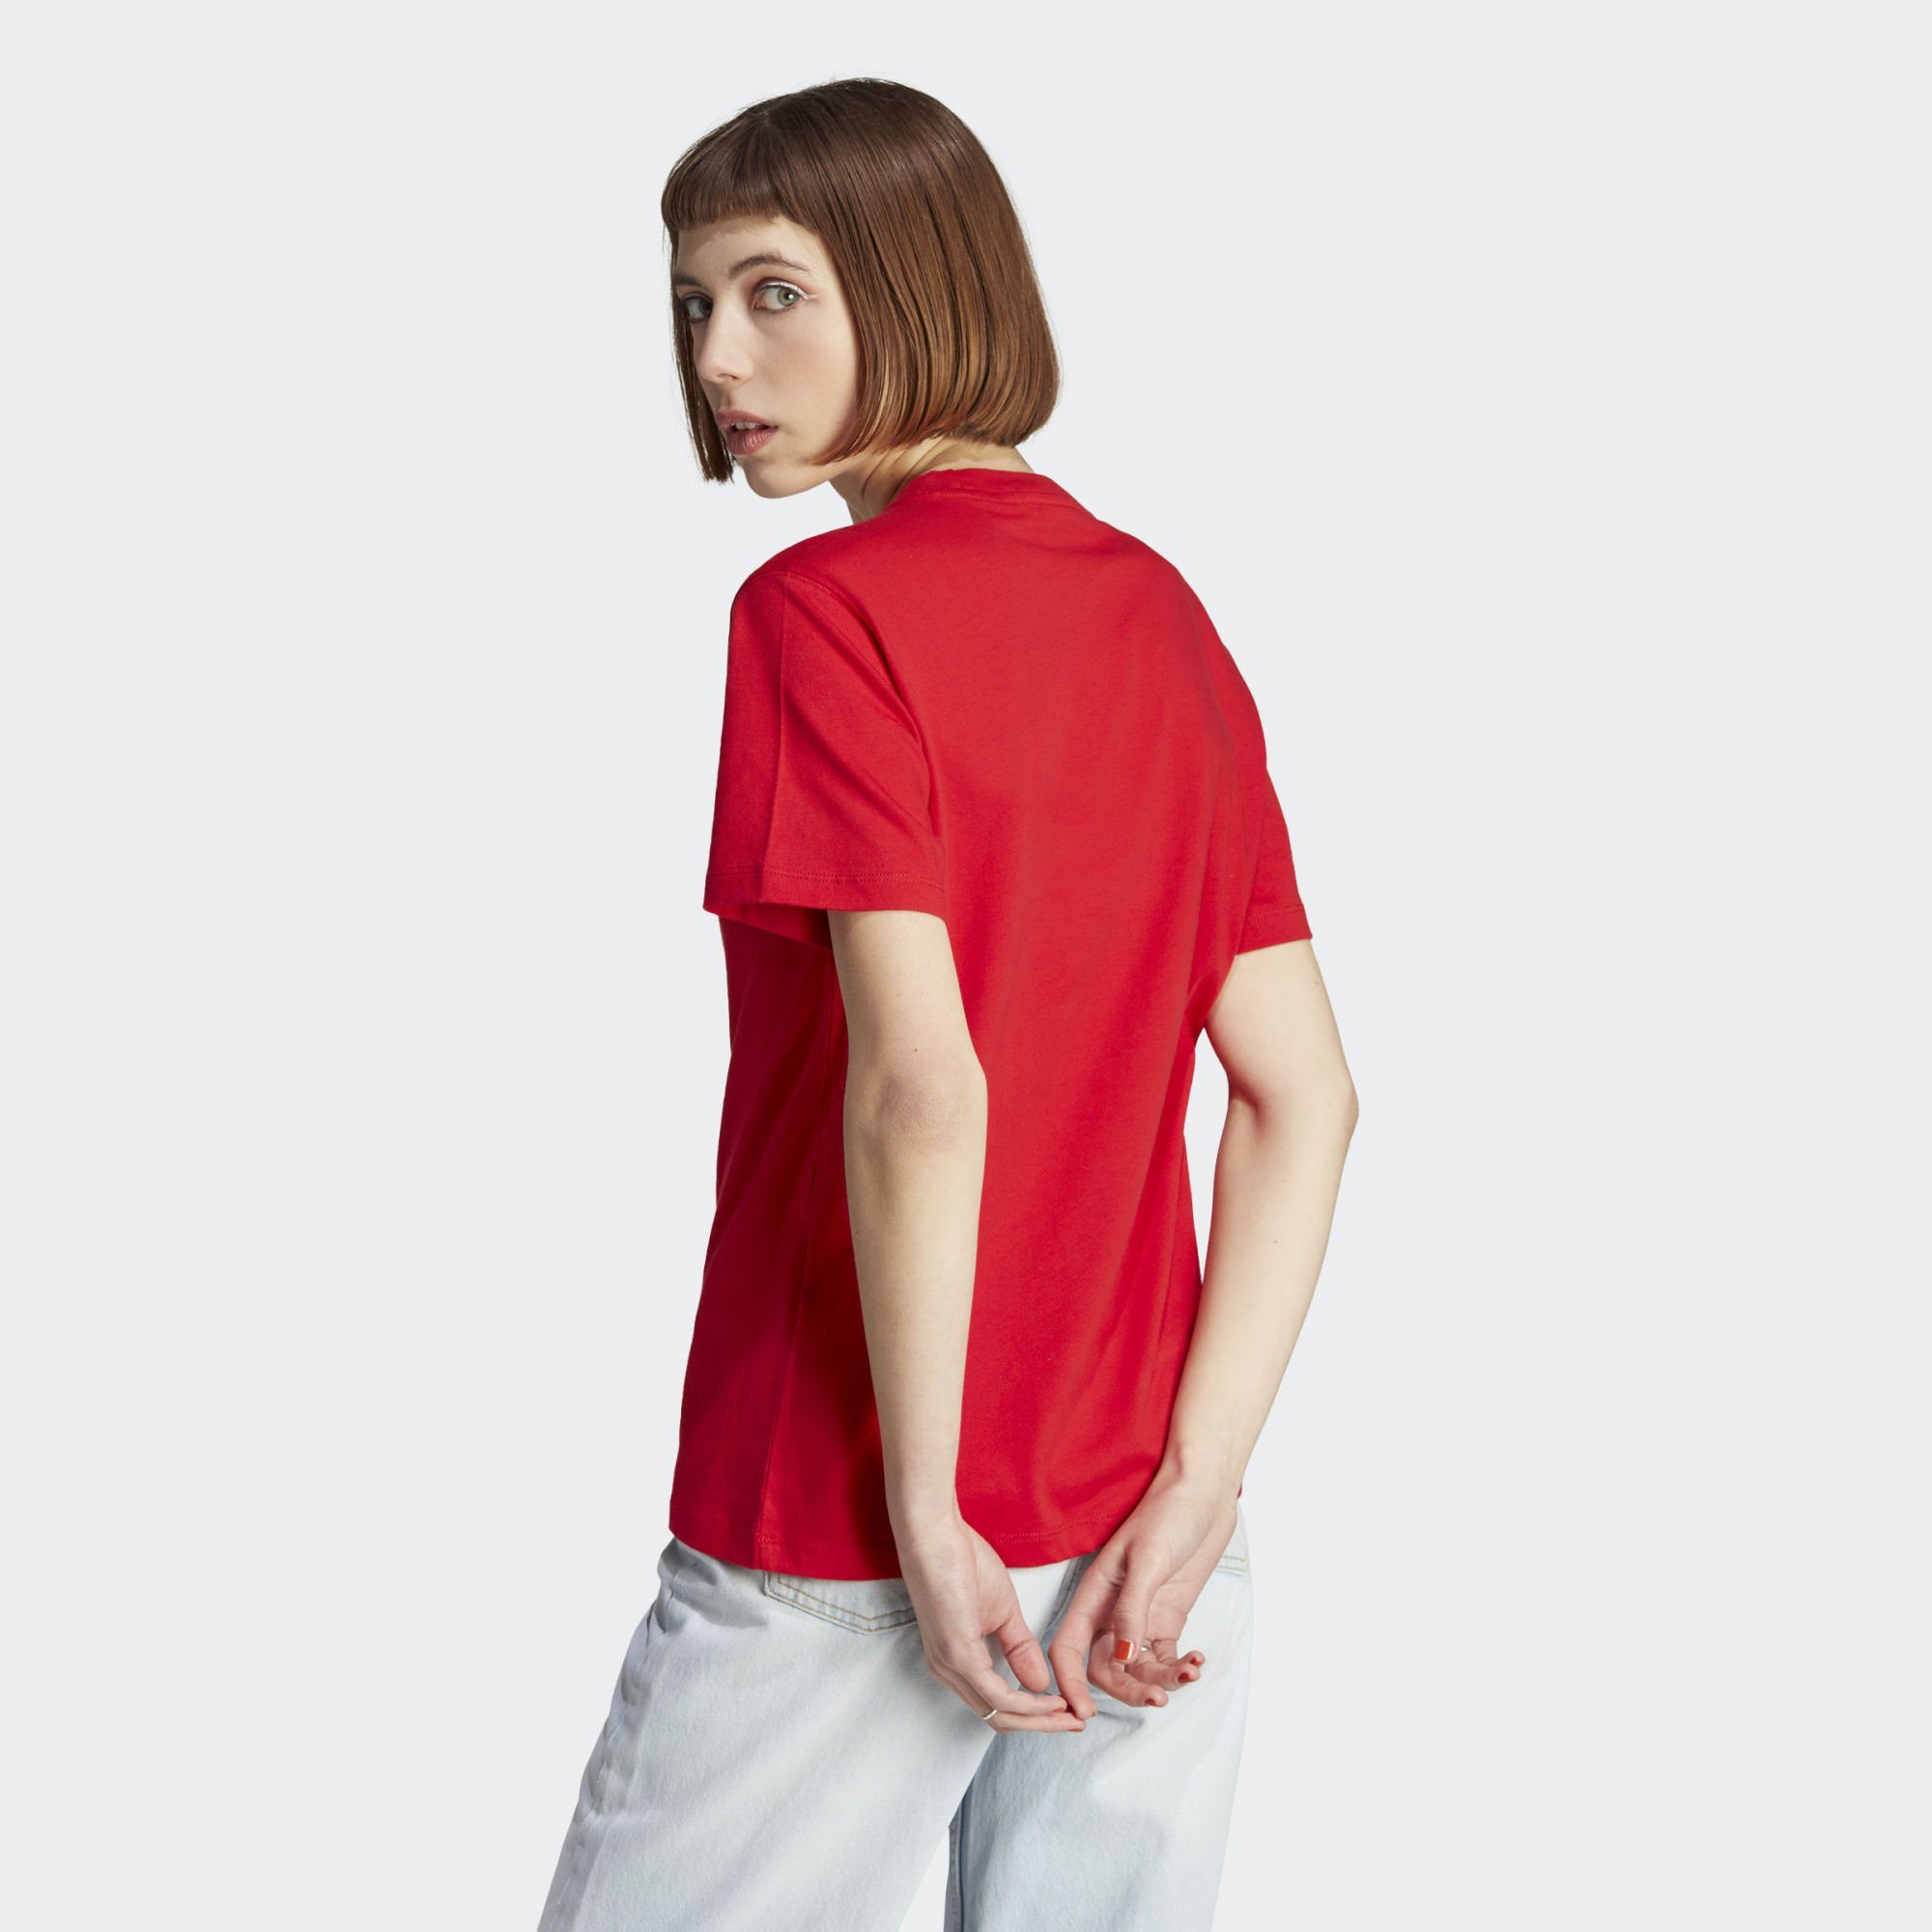 CLASSICS ADICOLOR Originals Better T-Shirt Scarlet T-SHIRT adidas TREFOIL